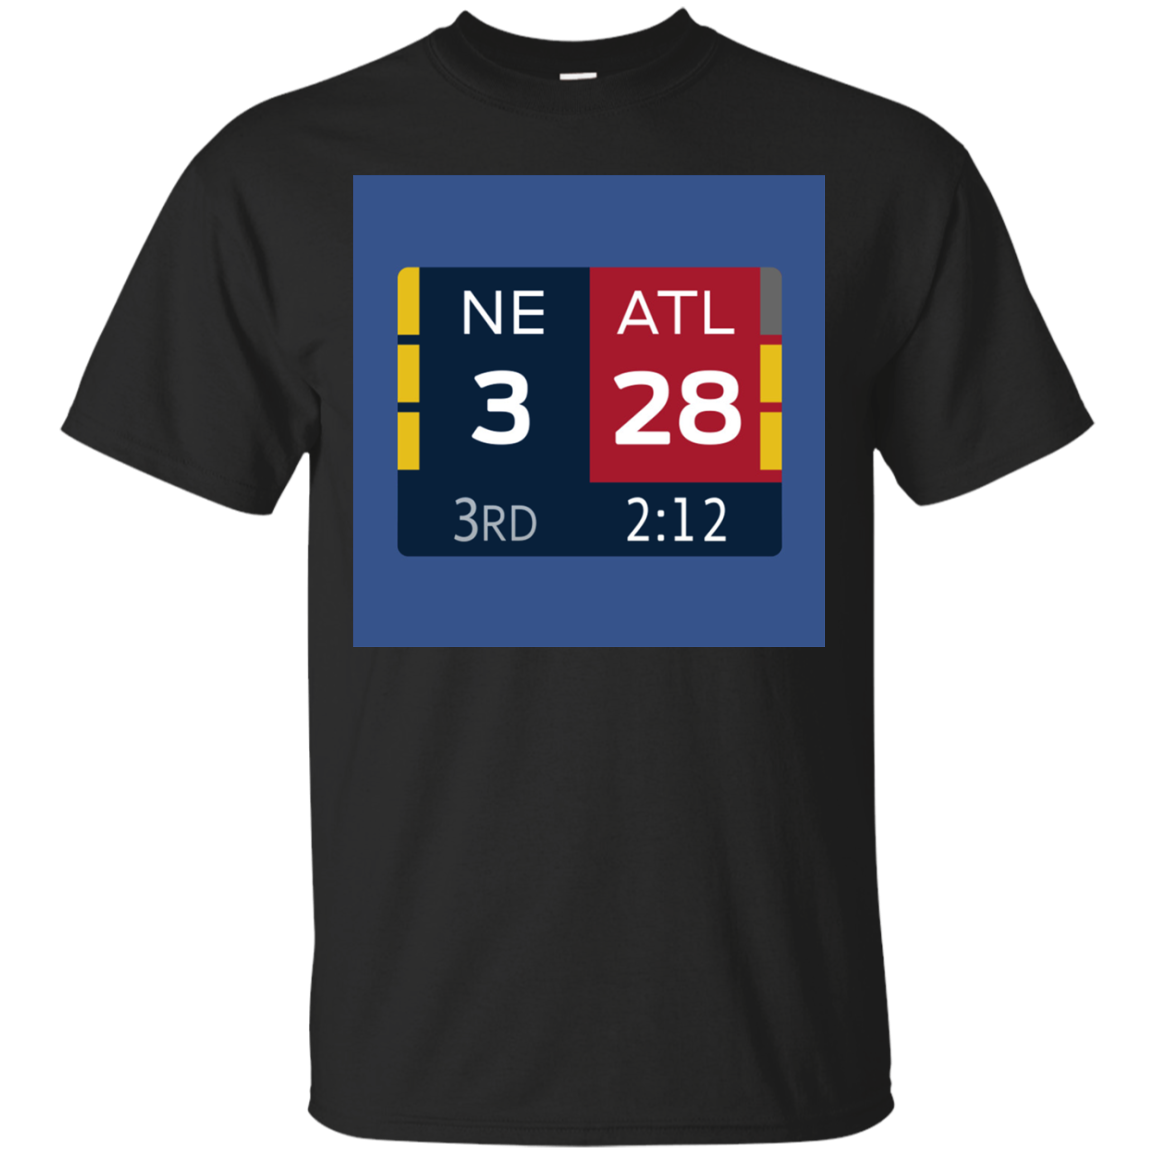 NE 3 ATL 28 Final t-shirt, hoodie, tank